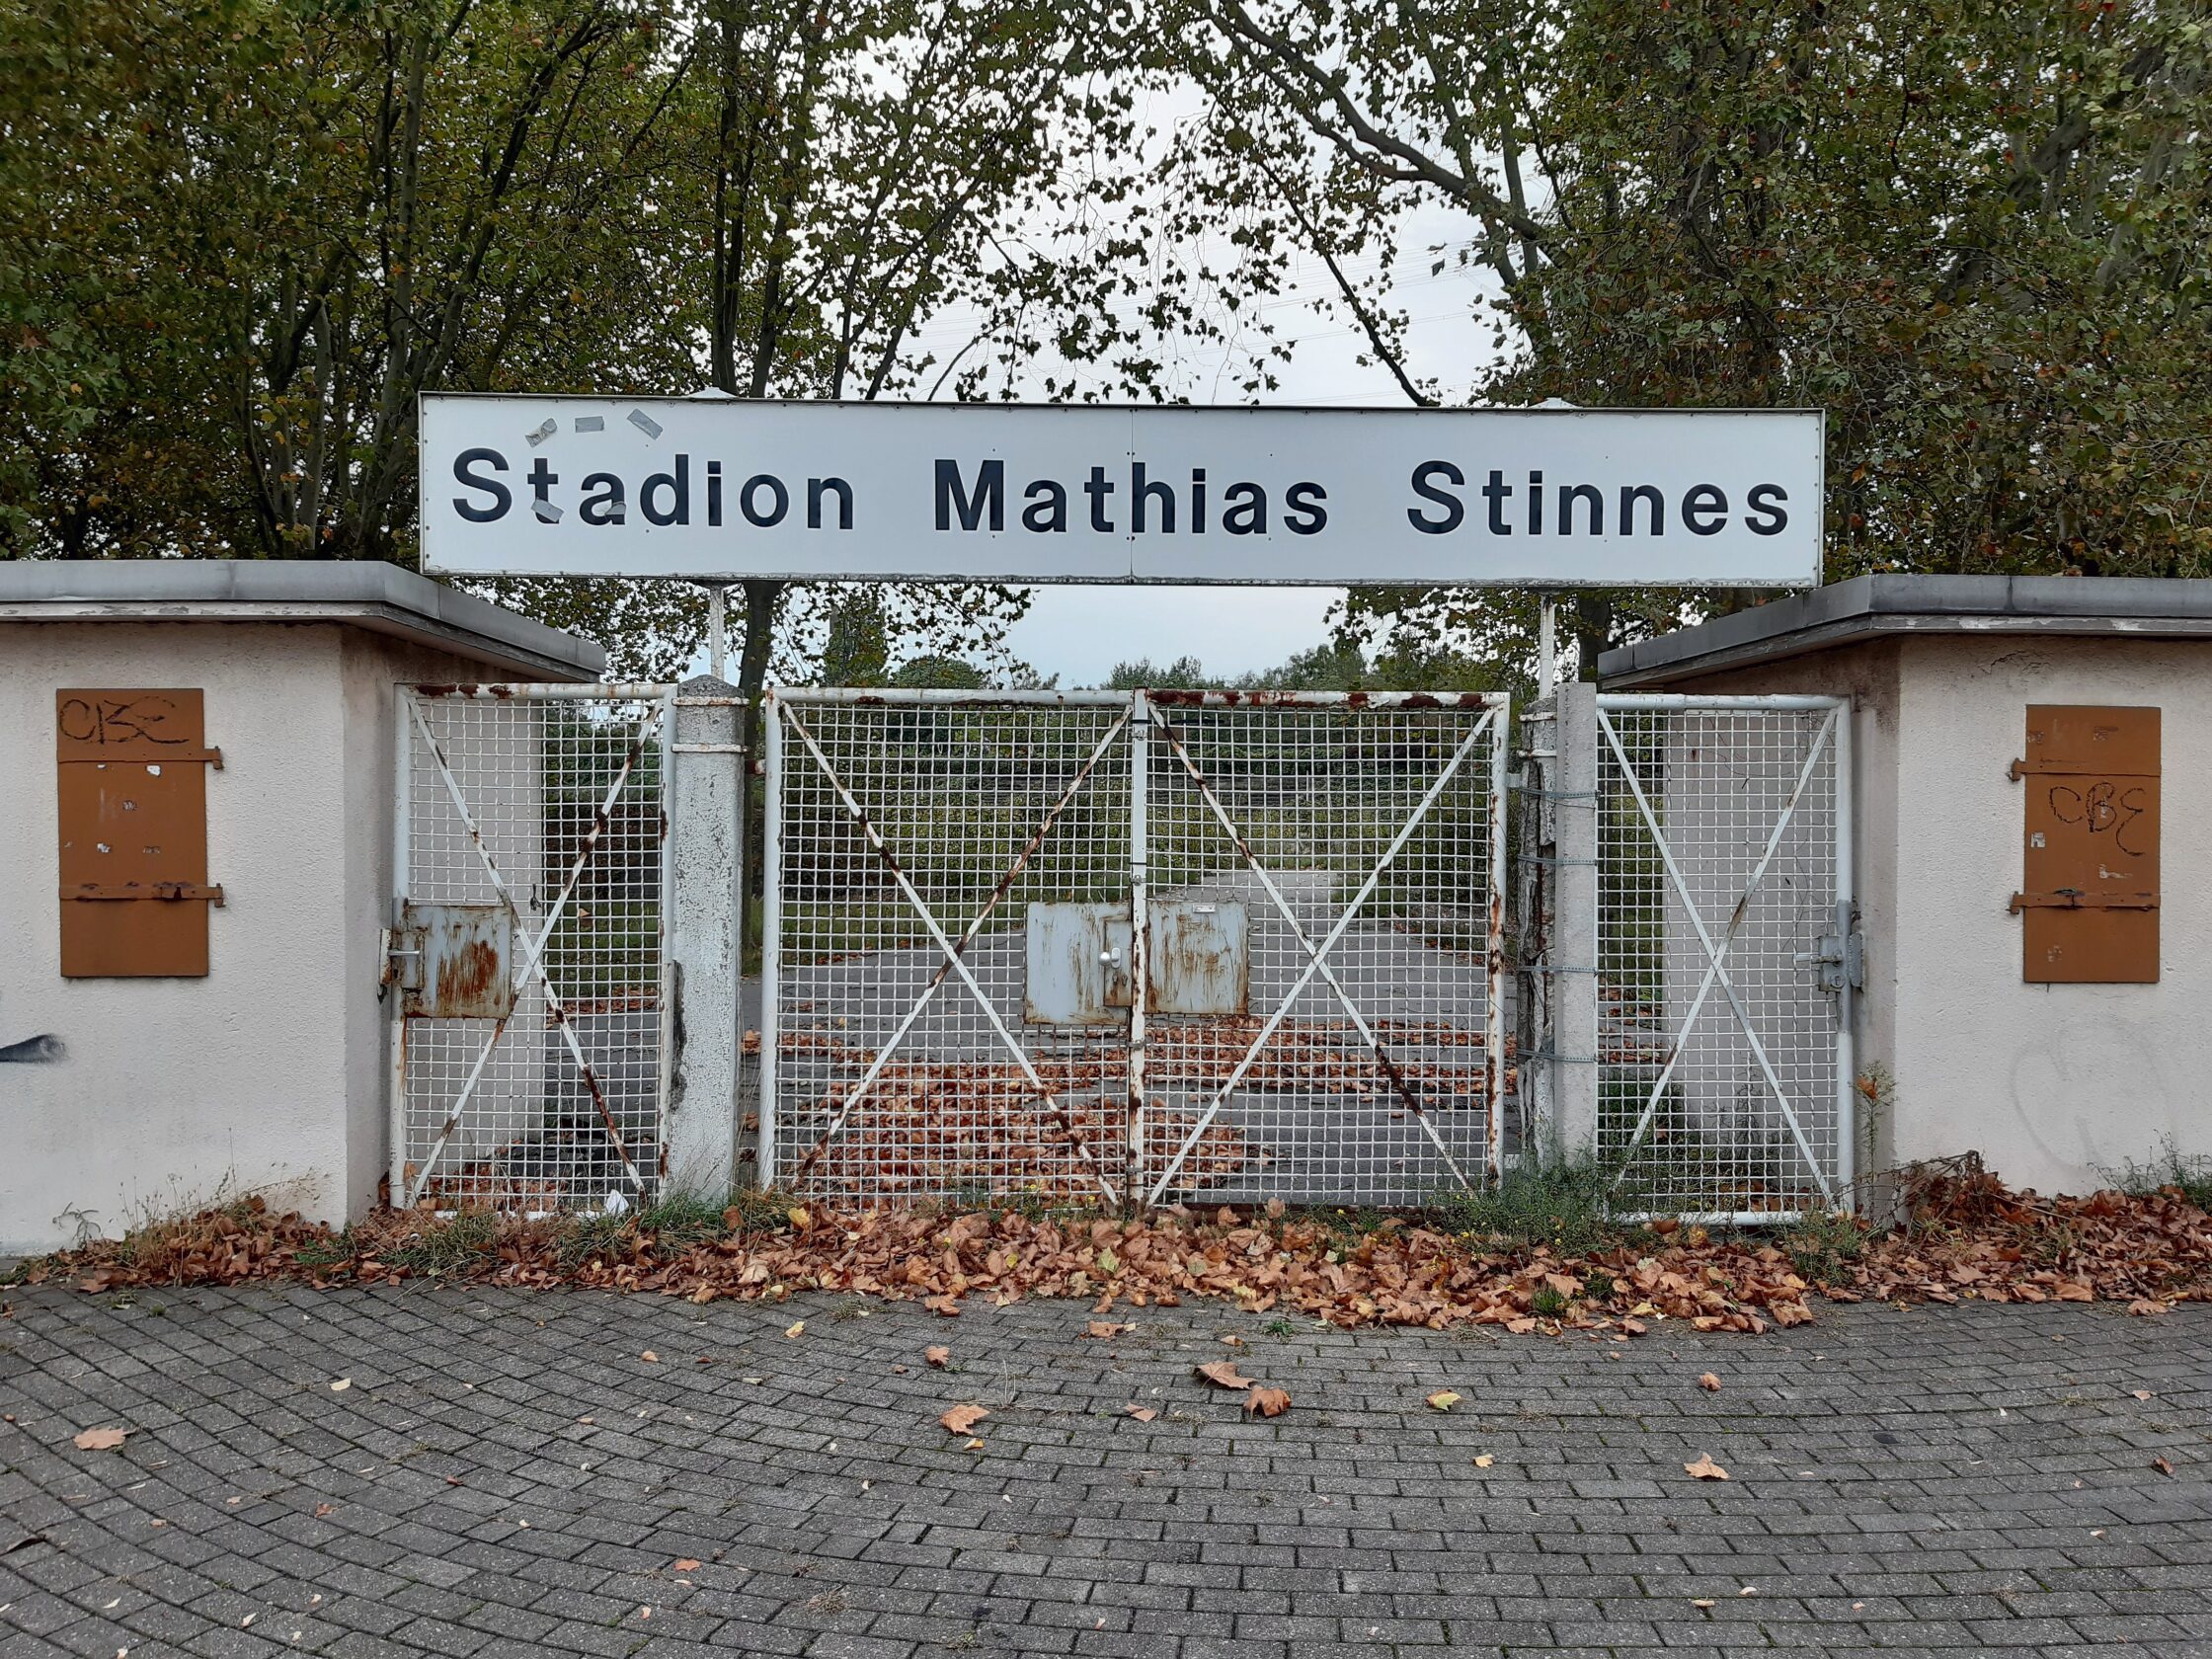 Stadion Mathias Stinnes, Essen